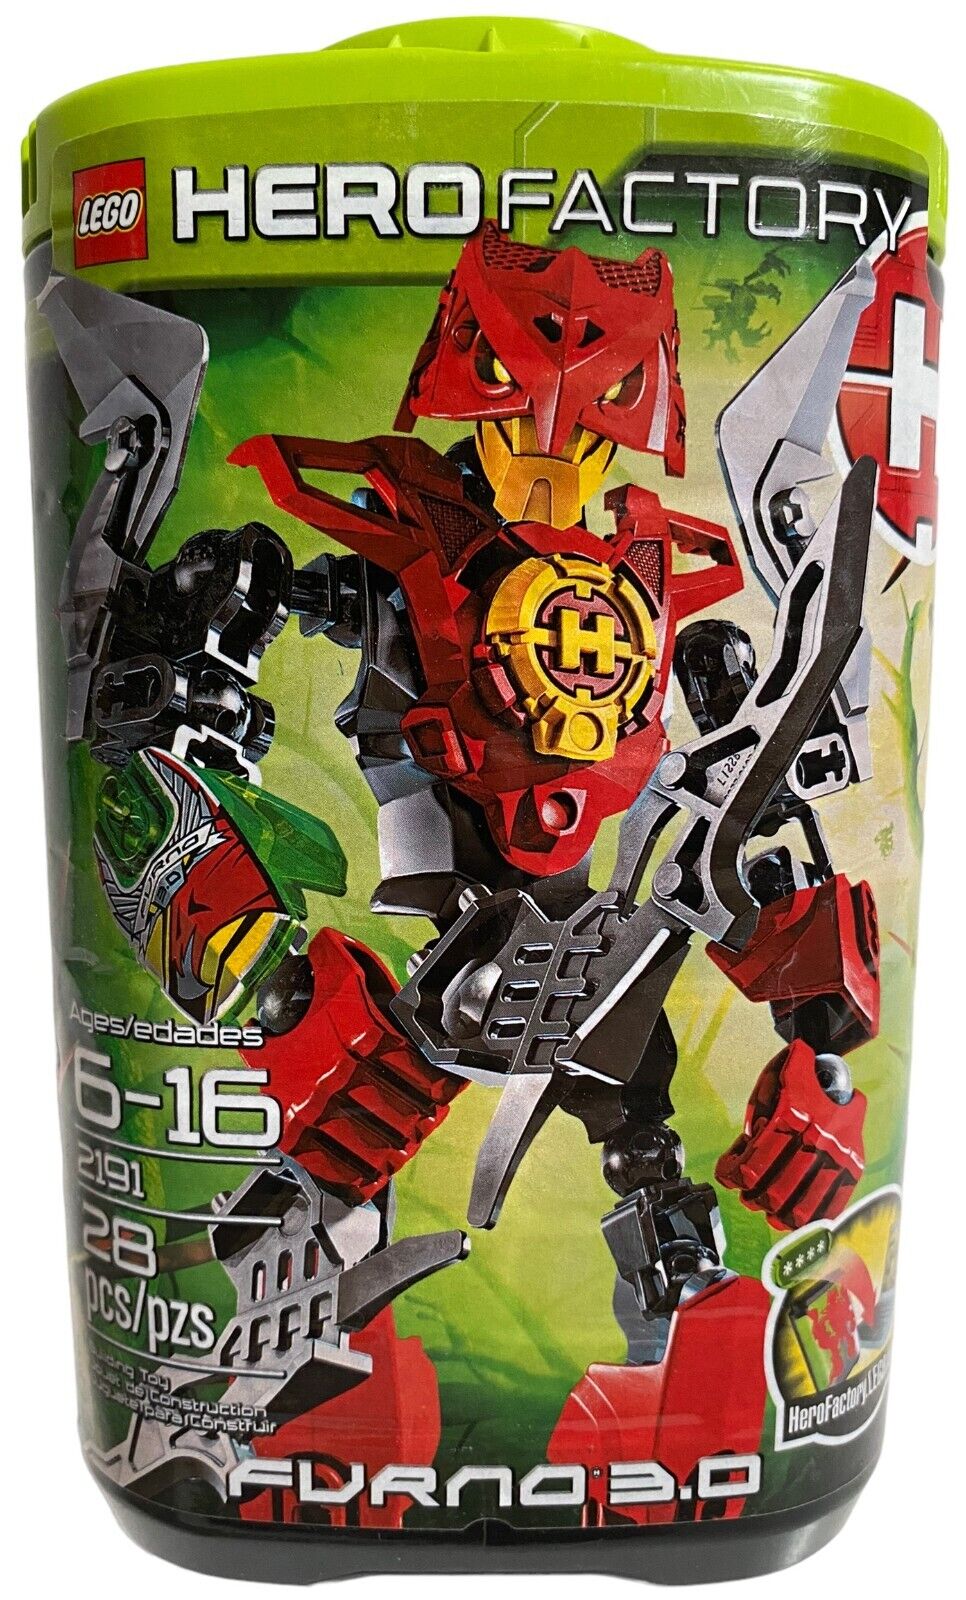 LEGO 2191 Hero Factory Furno 3.0 Set NEW FACTORY SEALED 2011 Bionicle Interest